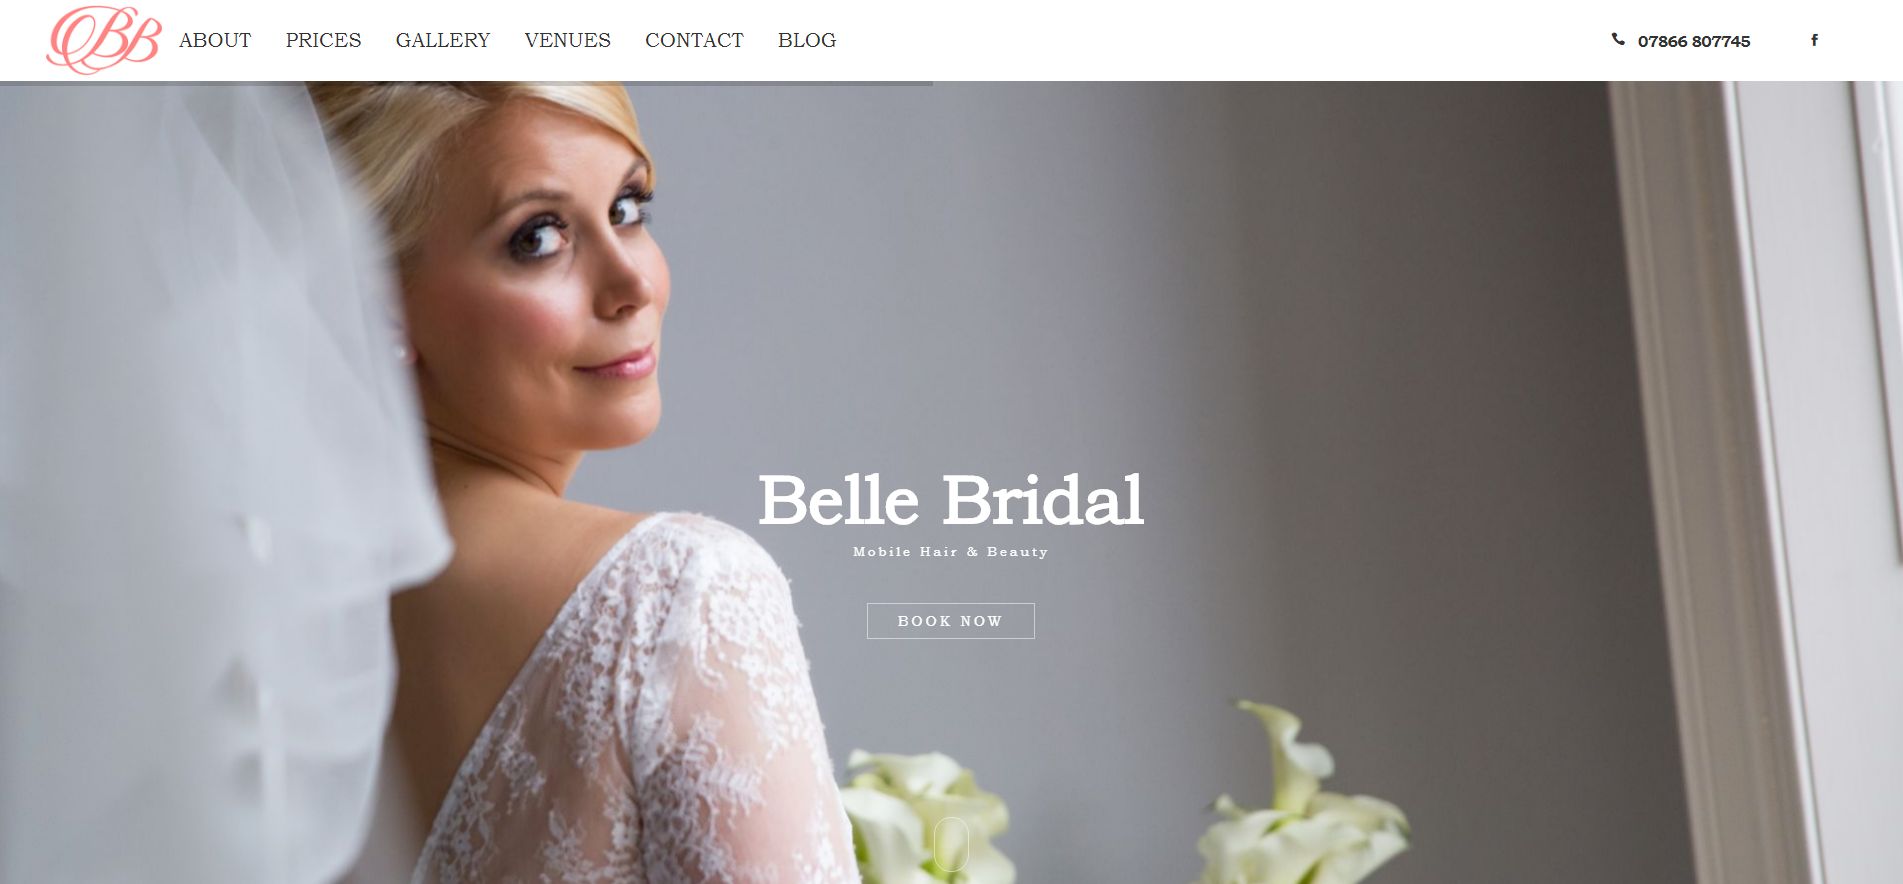 Belle-Bridal-Hair-Beauty-1-1